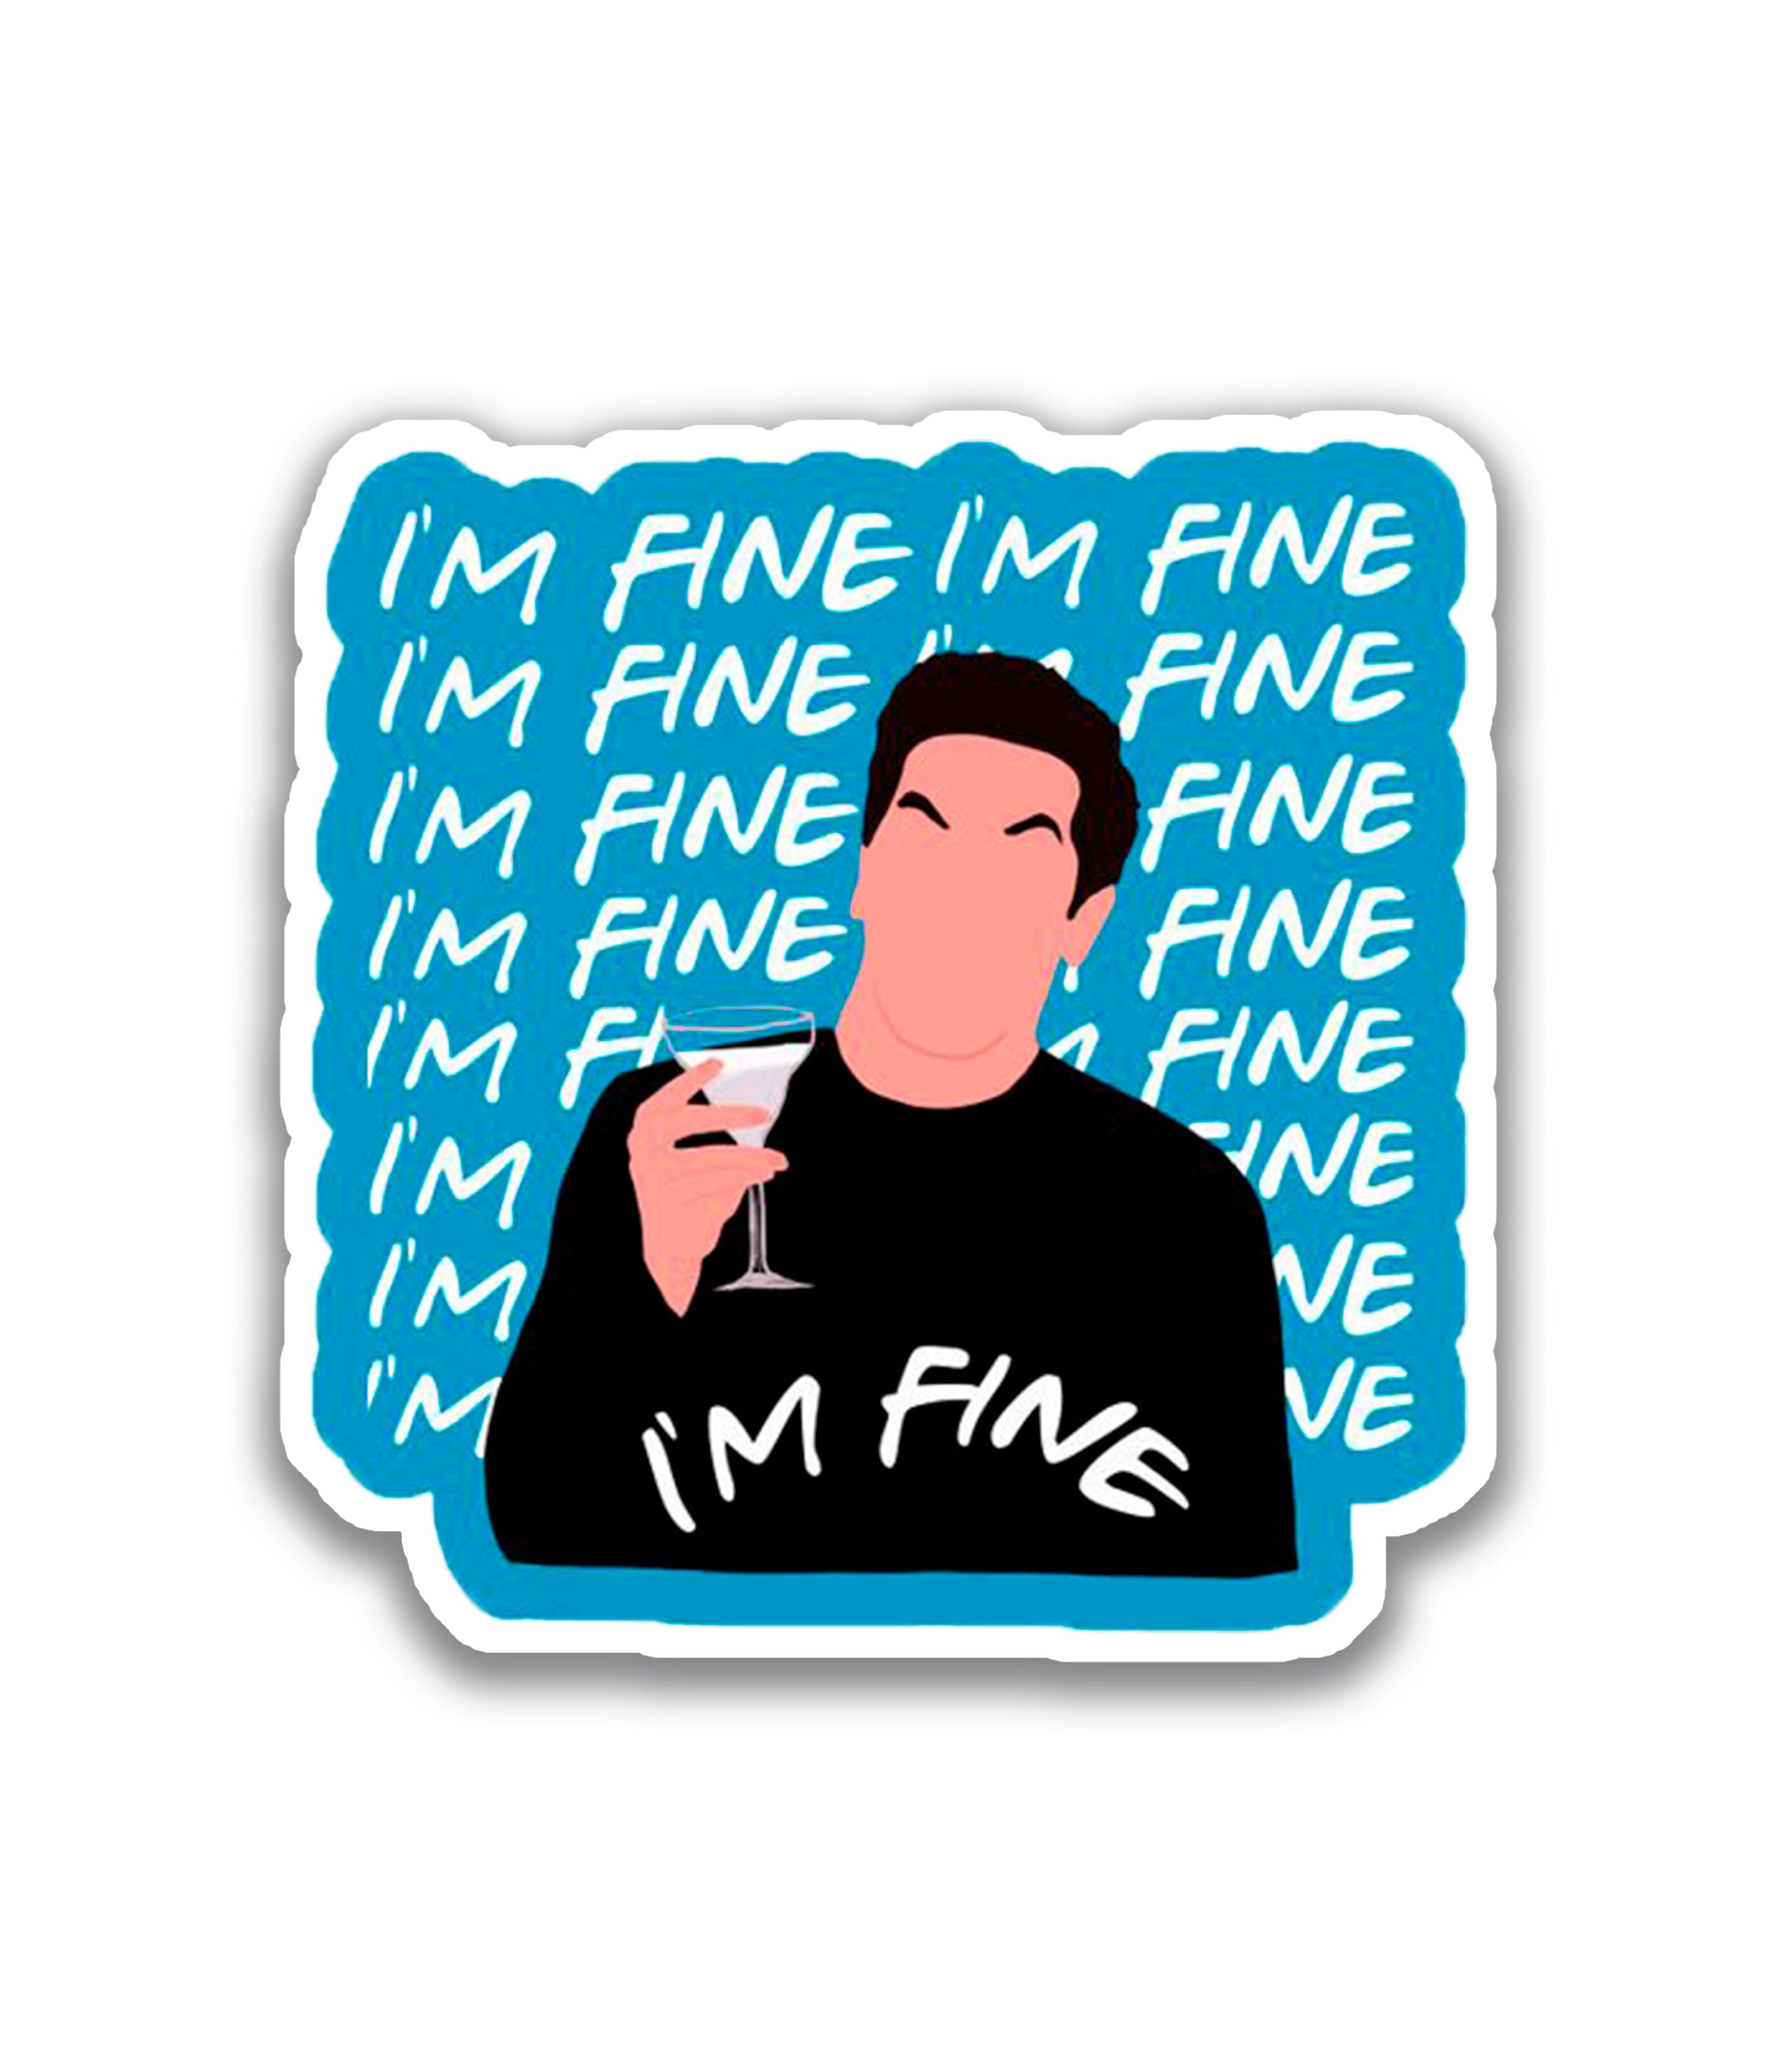 I'm fine - Rei do Sticker